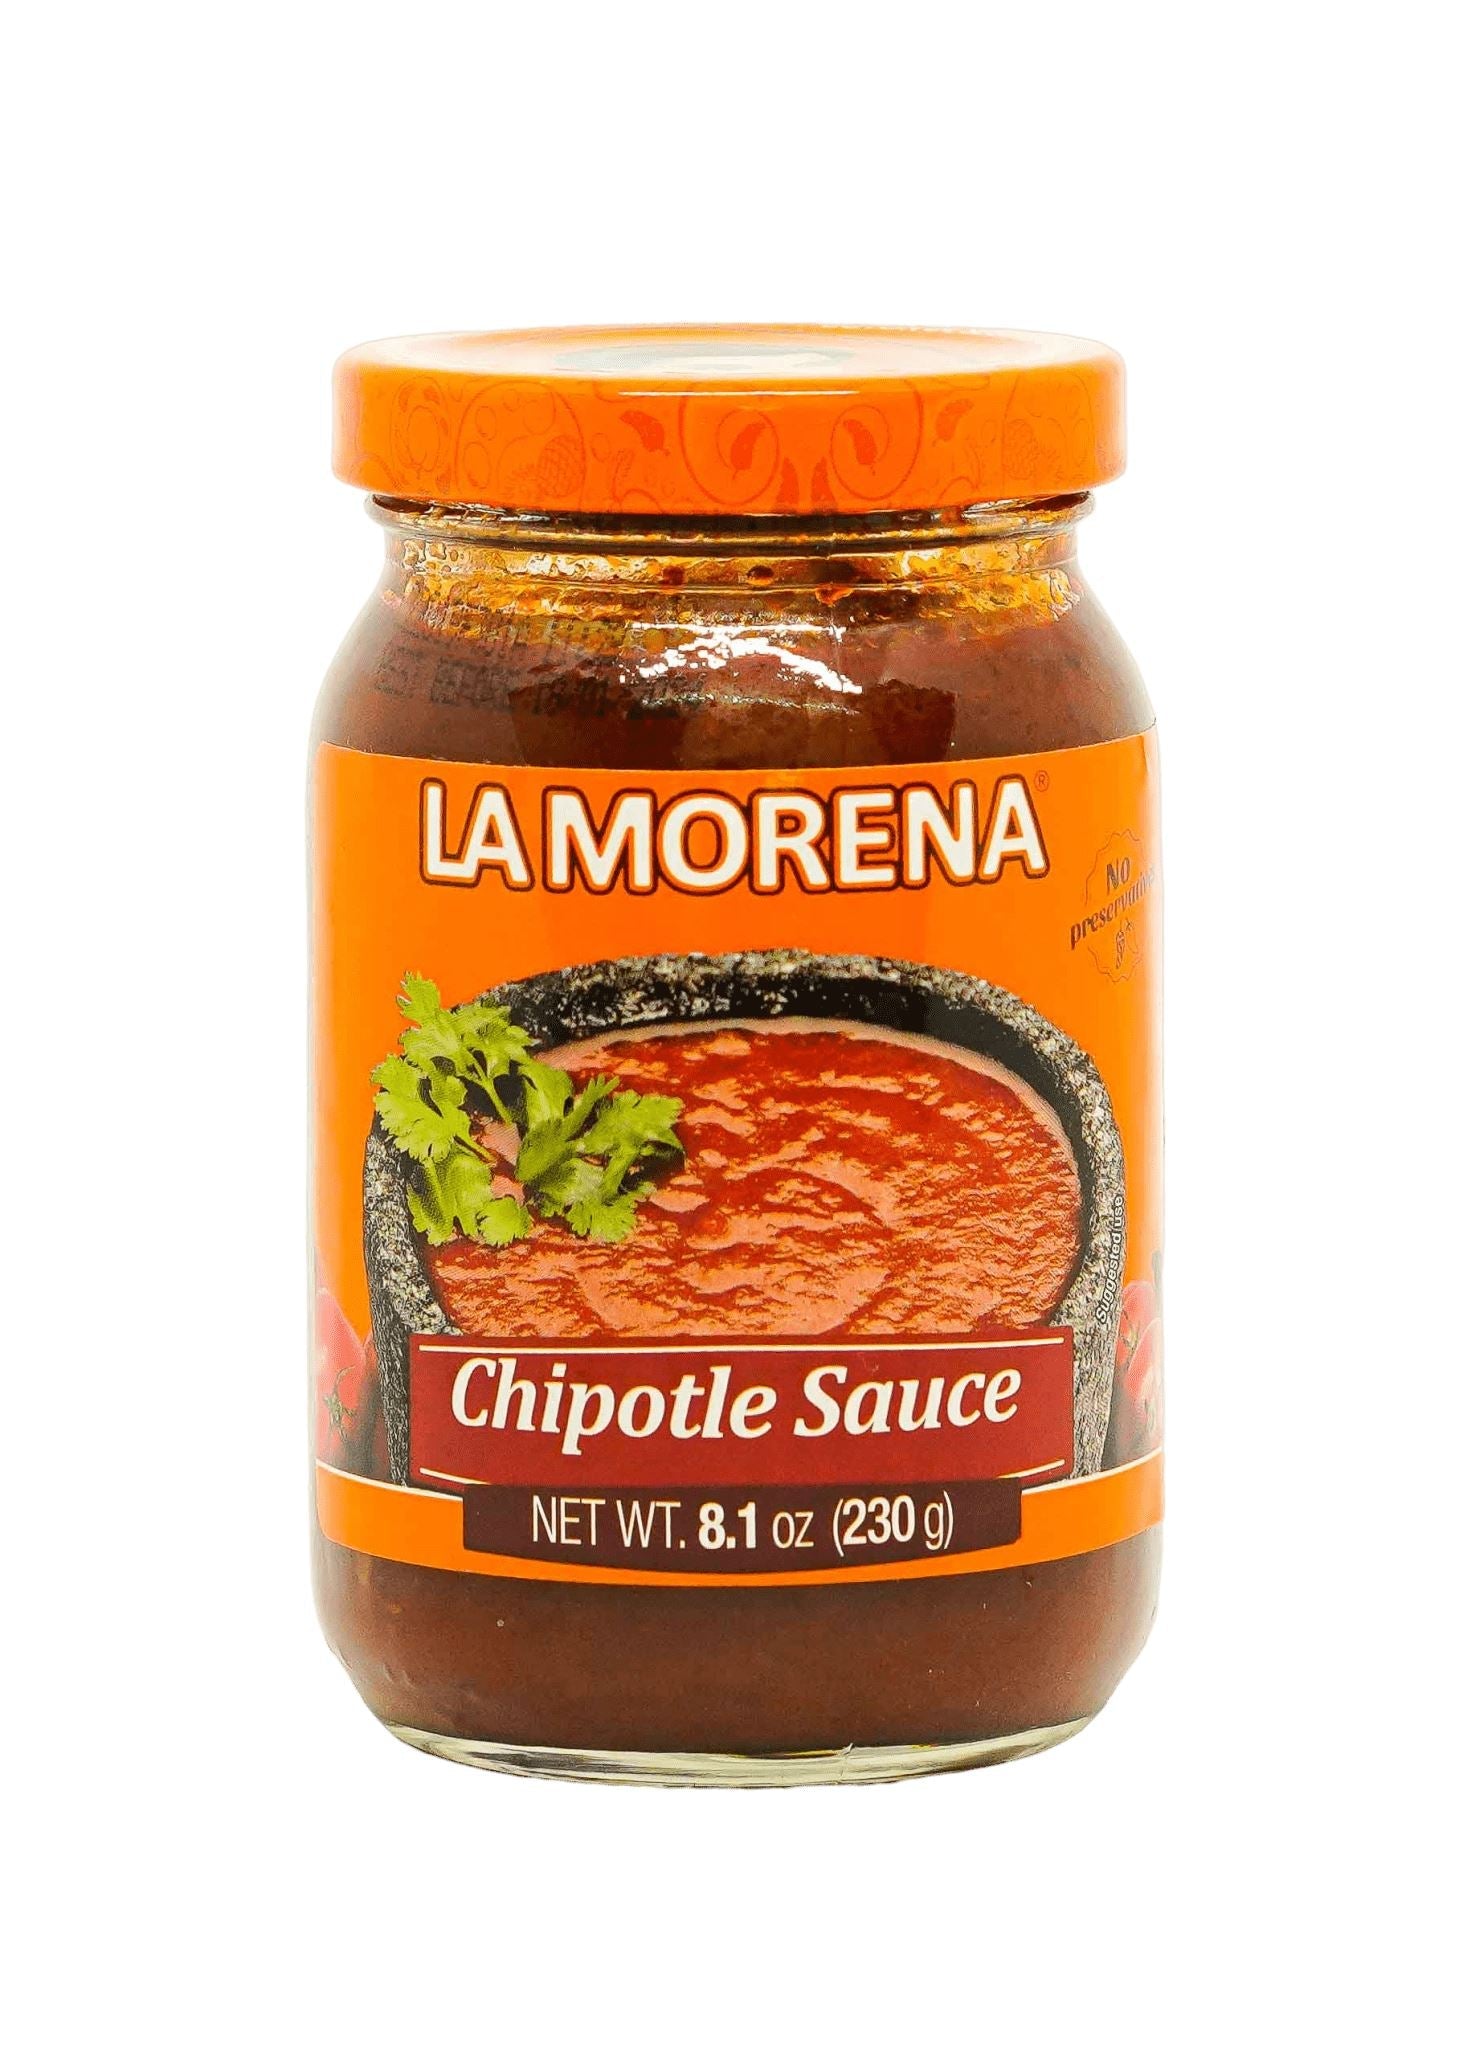 La Morena Chipotle Sauce 230g Sauces La Morena 